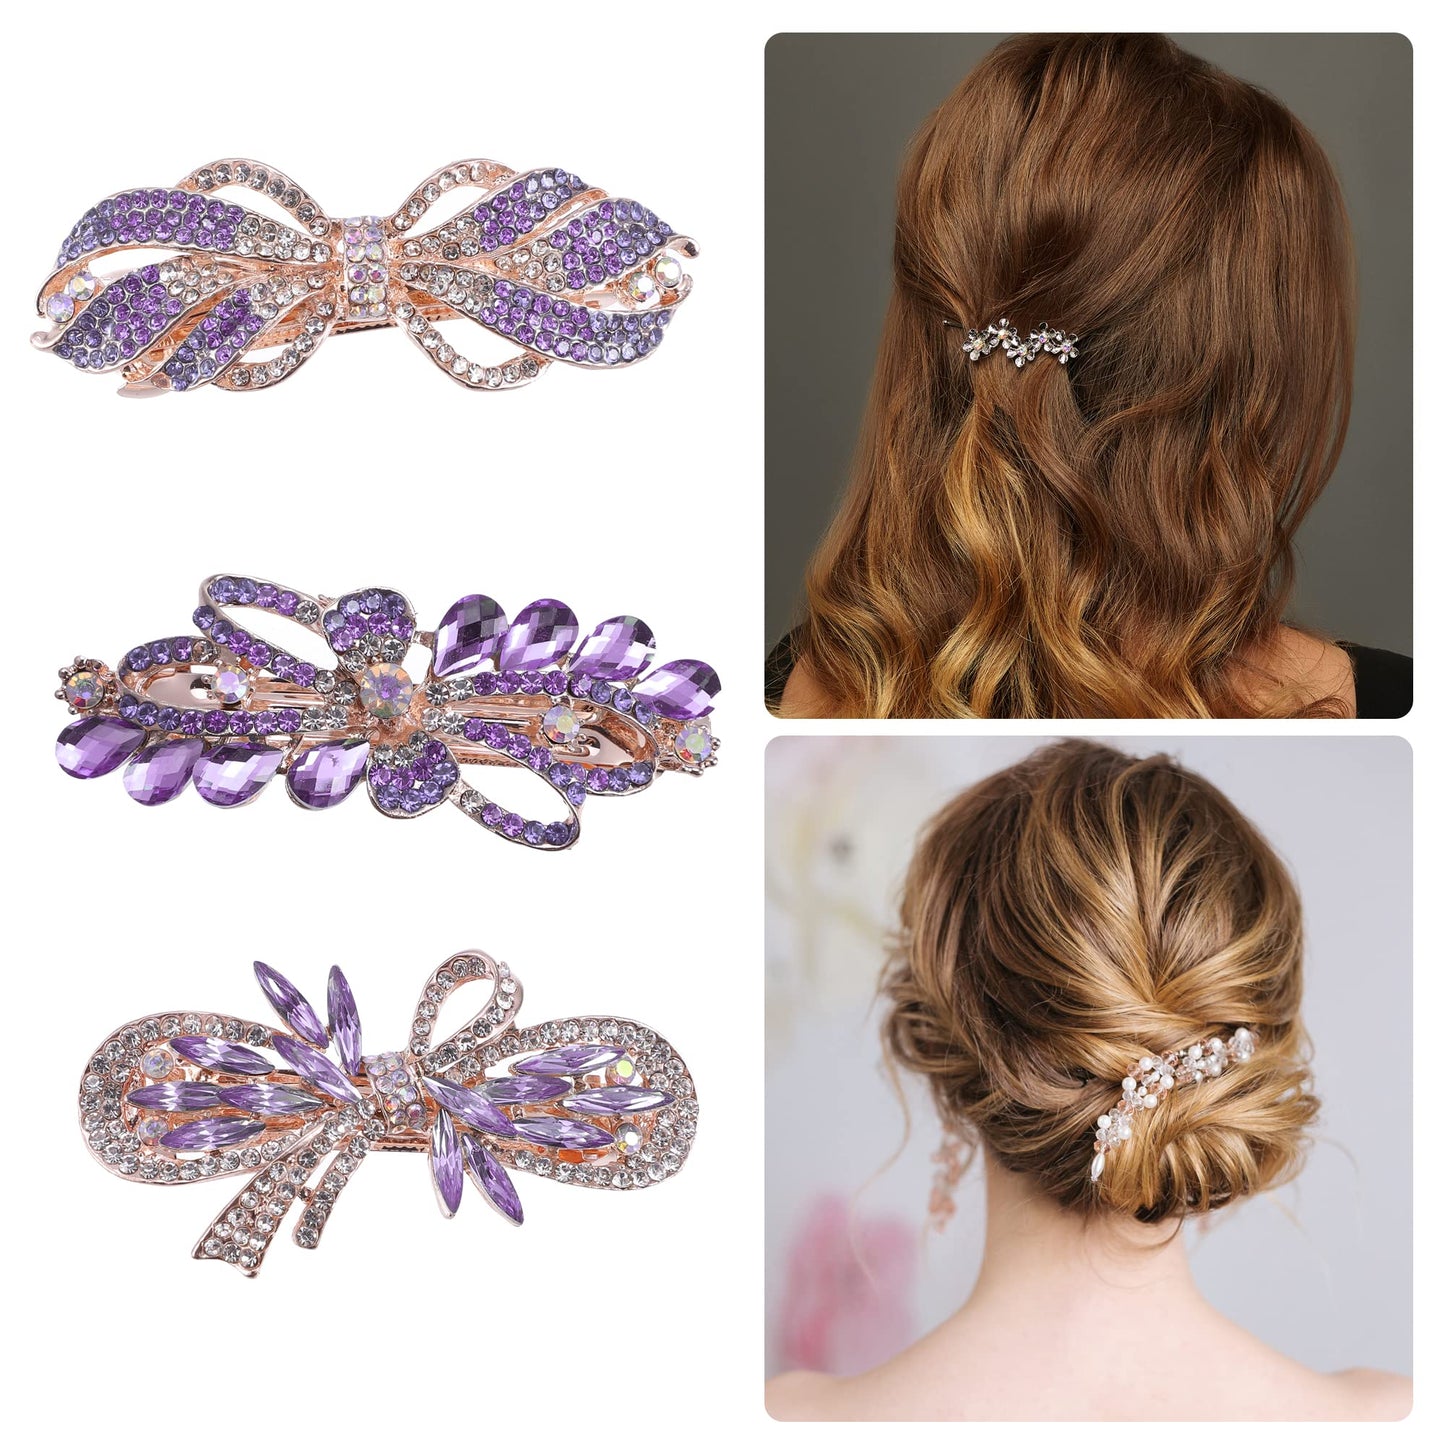 VOCOSTE 3 Pcs Hair Barrettes, Hair Accessories for Women, Hair Clips, Sparkly Glitter, Rhinestones Hairpin, Purple